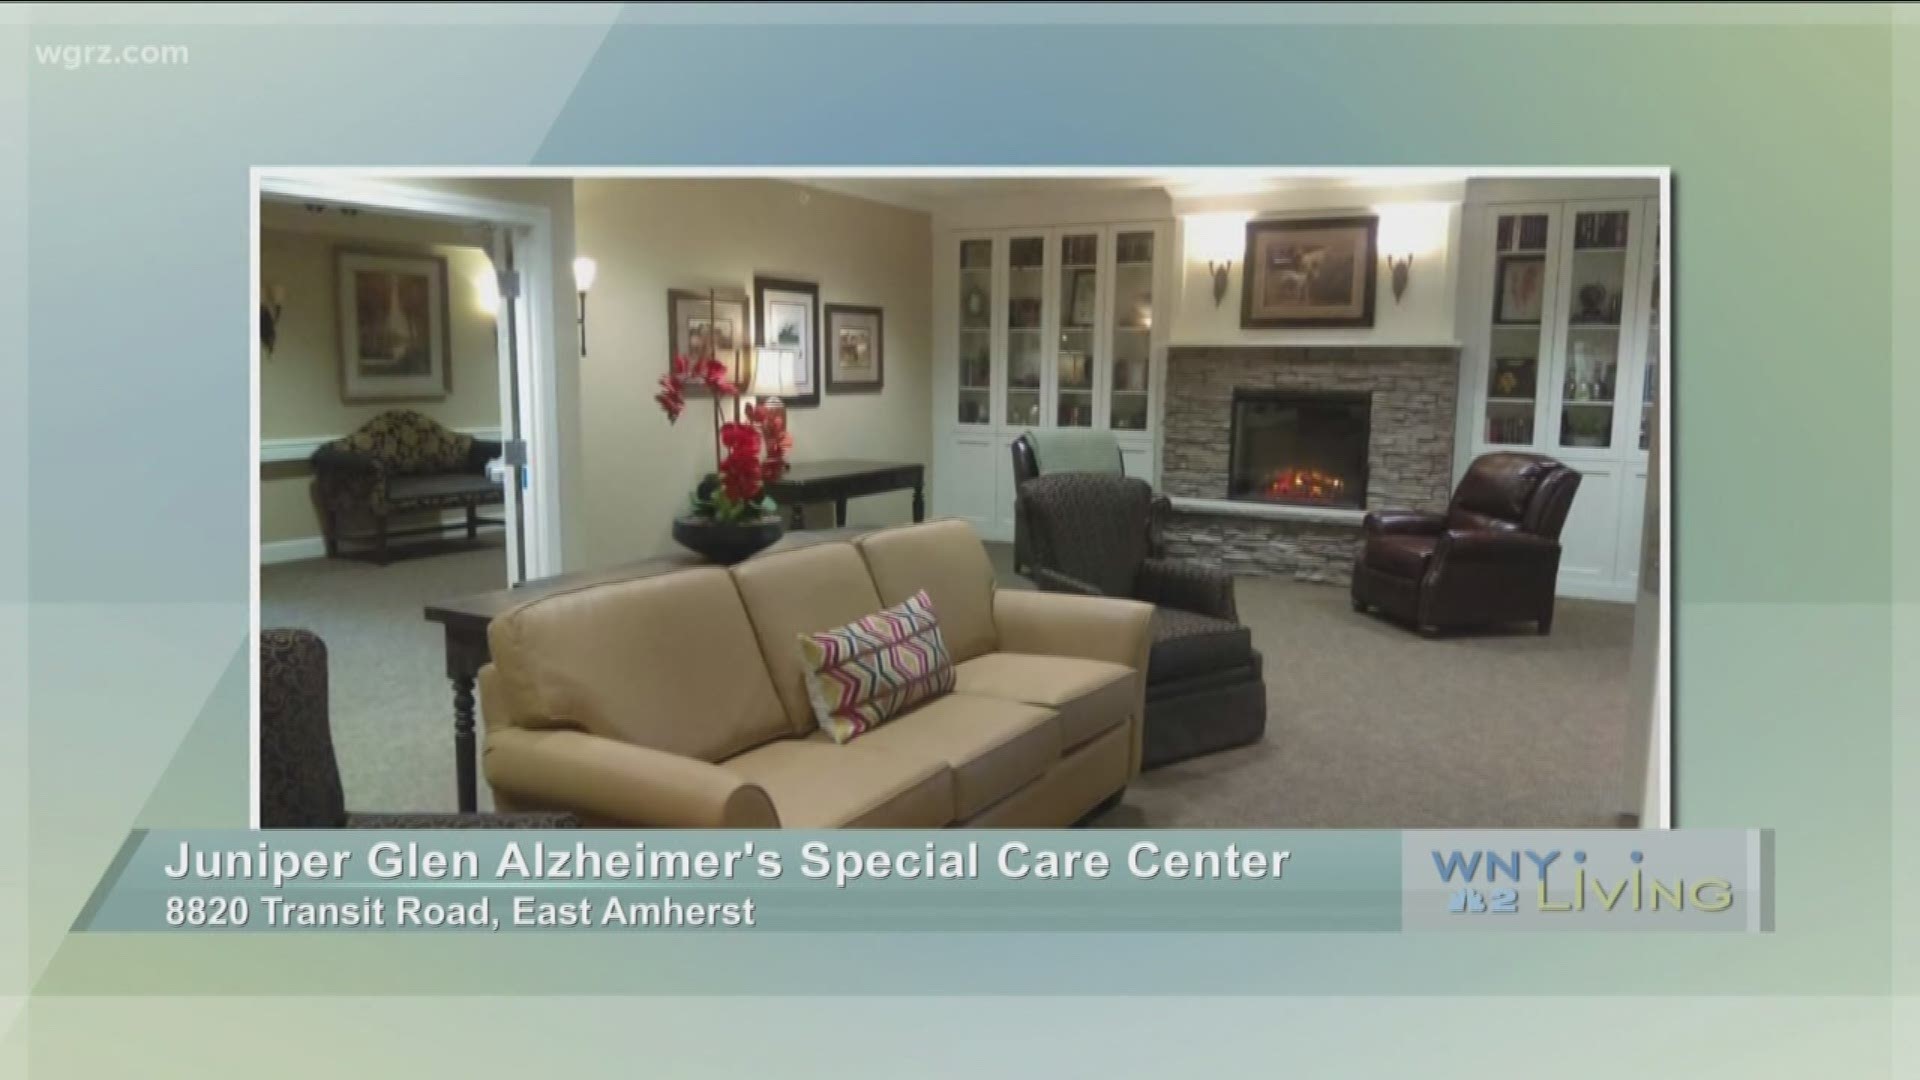 WNY Living - March 25 - Juniper Glen Alzheimer's Special Care Center (SPONSORED CONTENT)